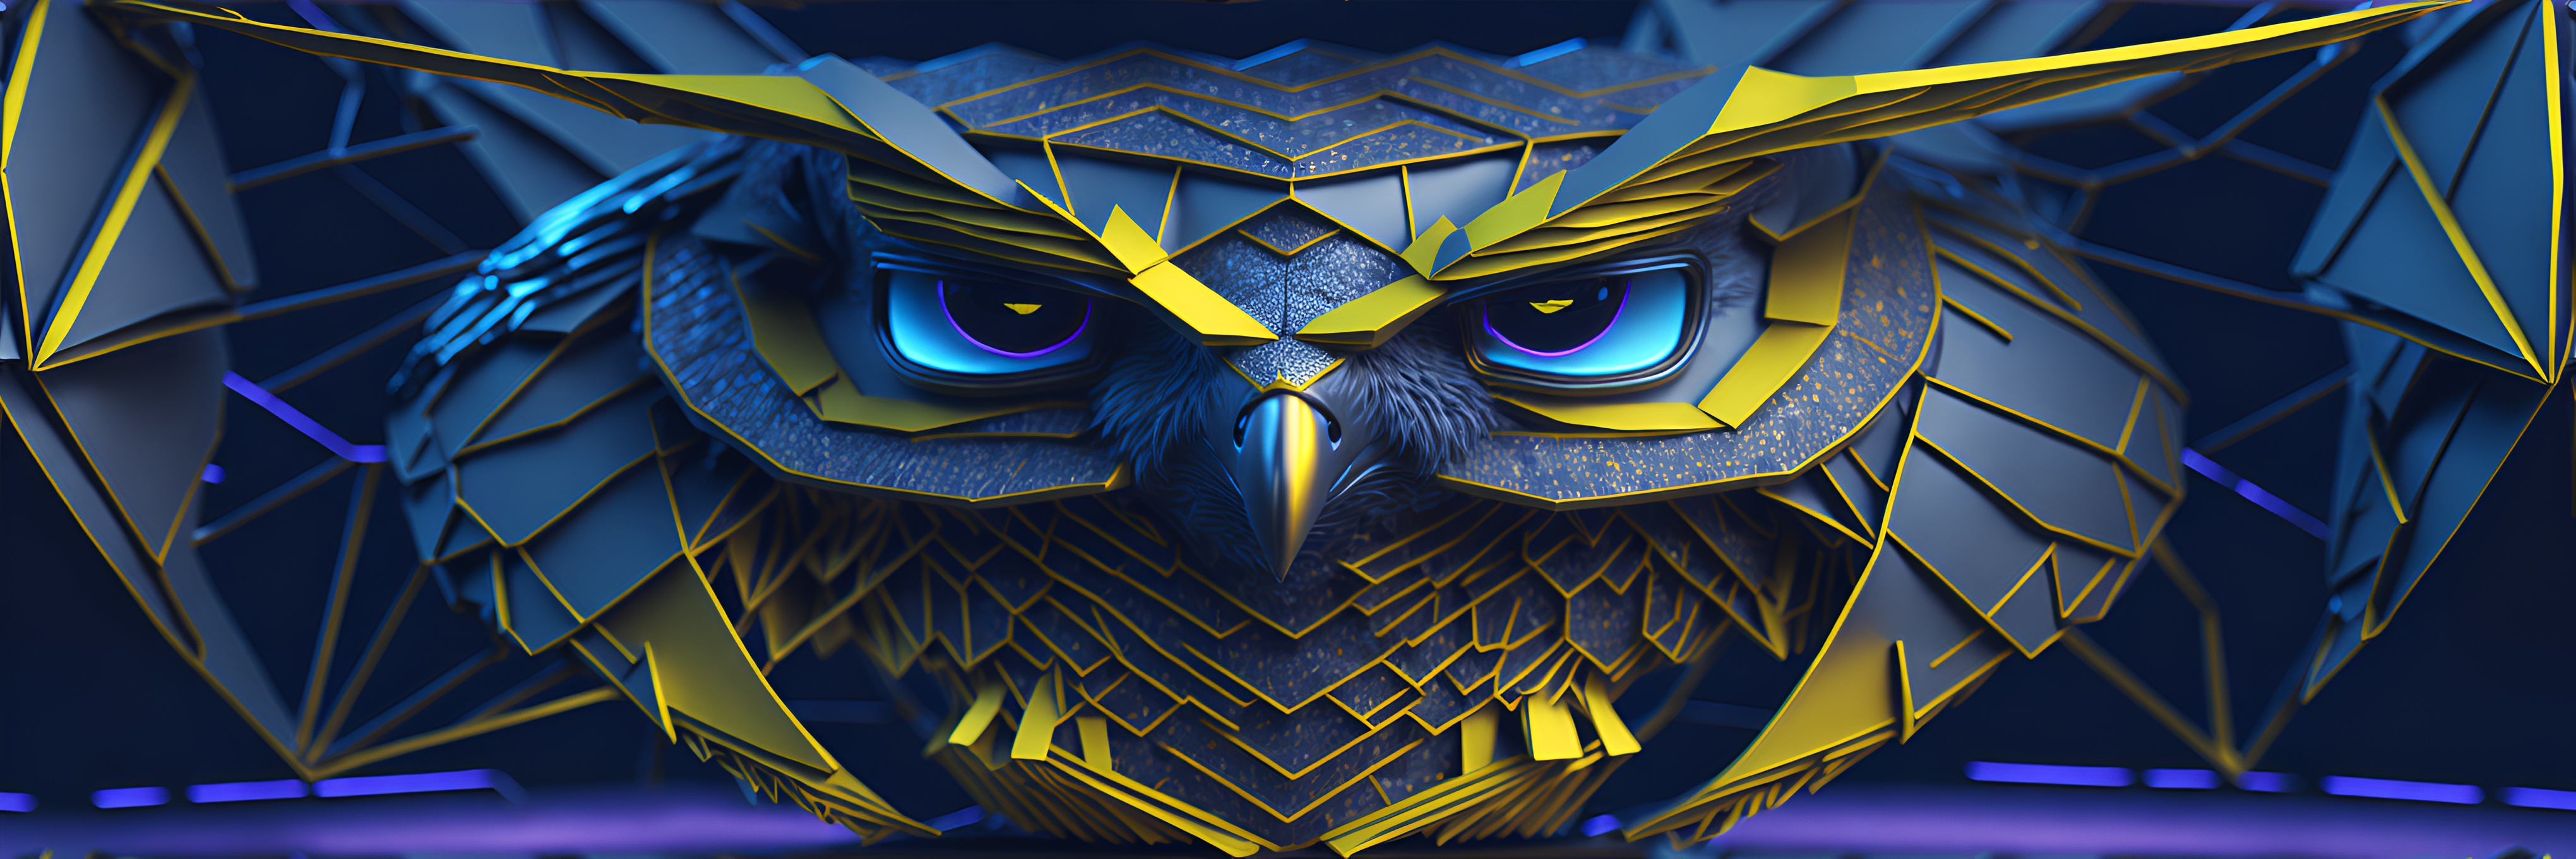 Owl-AI-Art 横幅